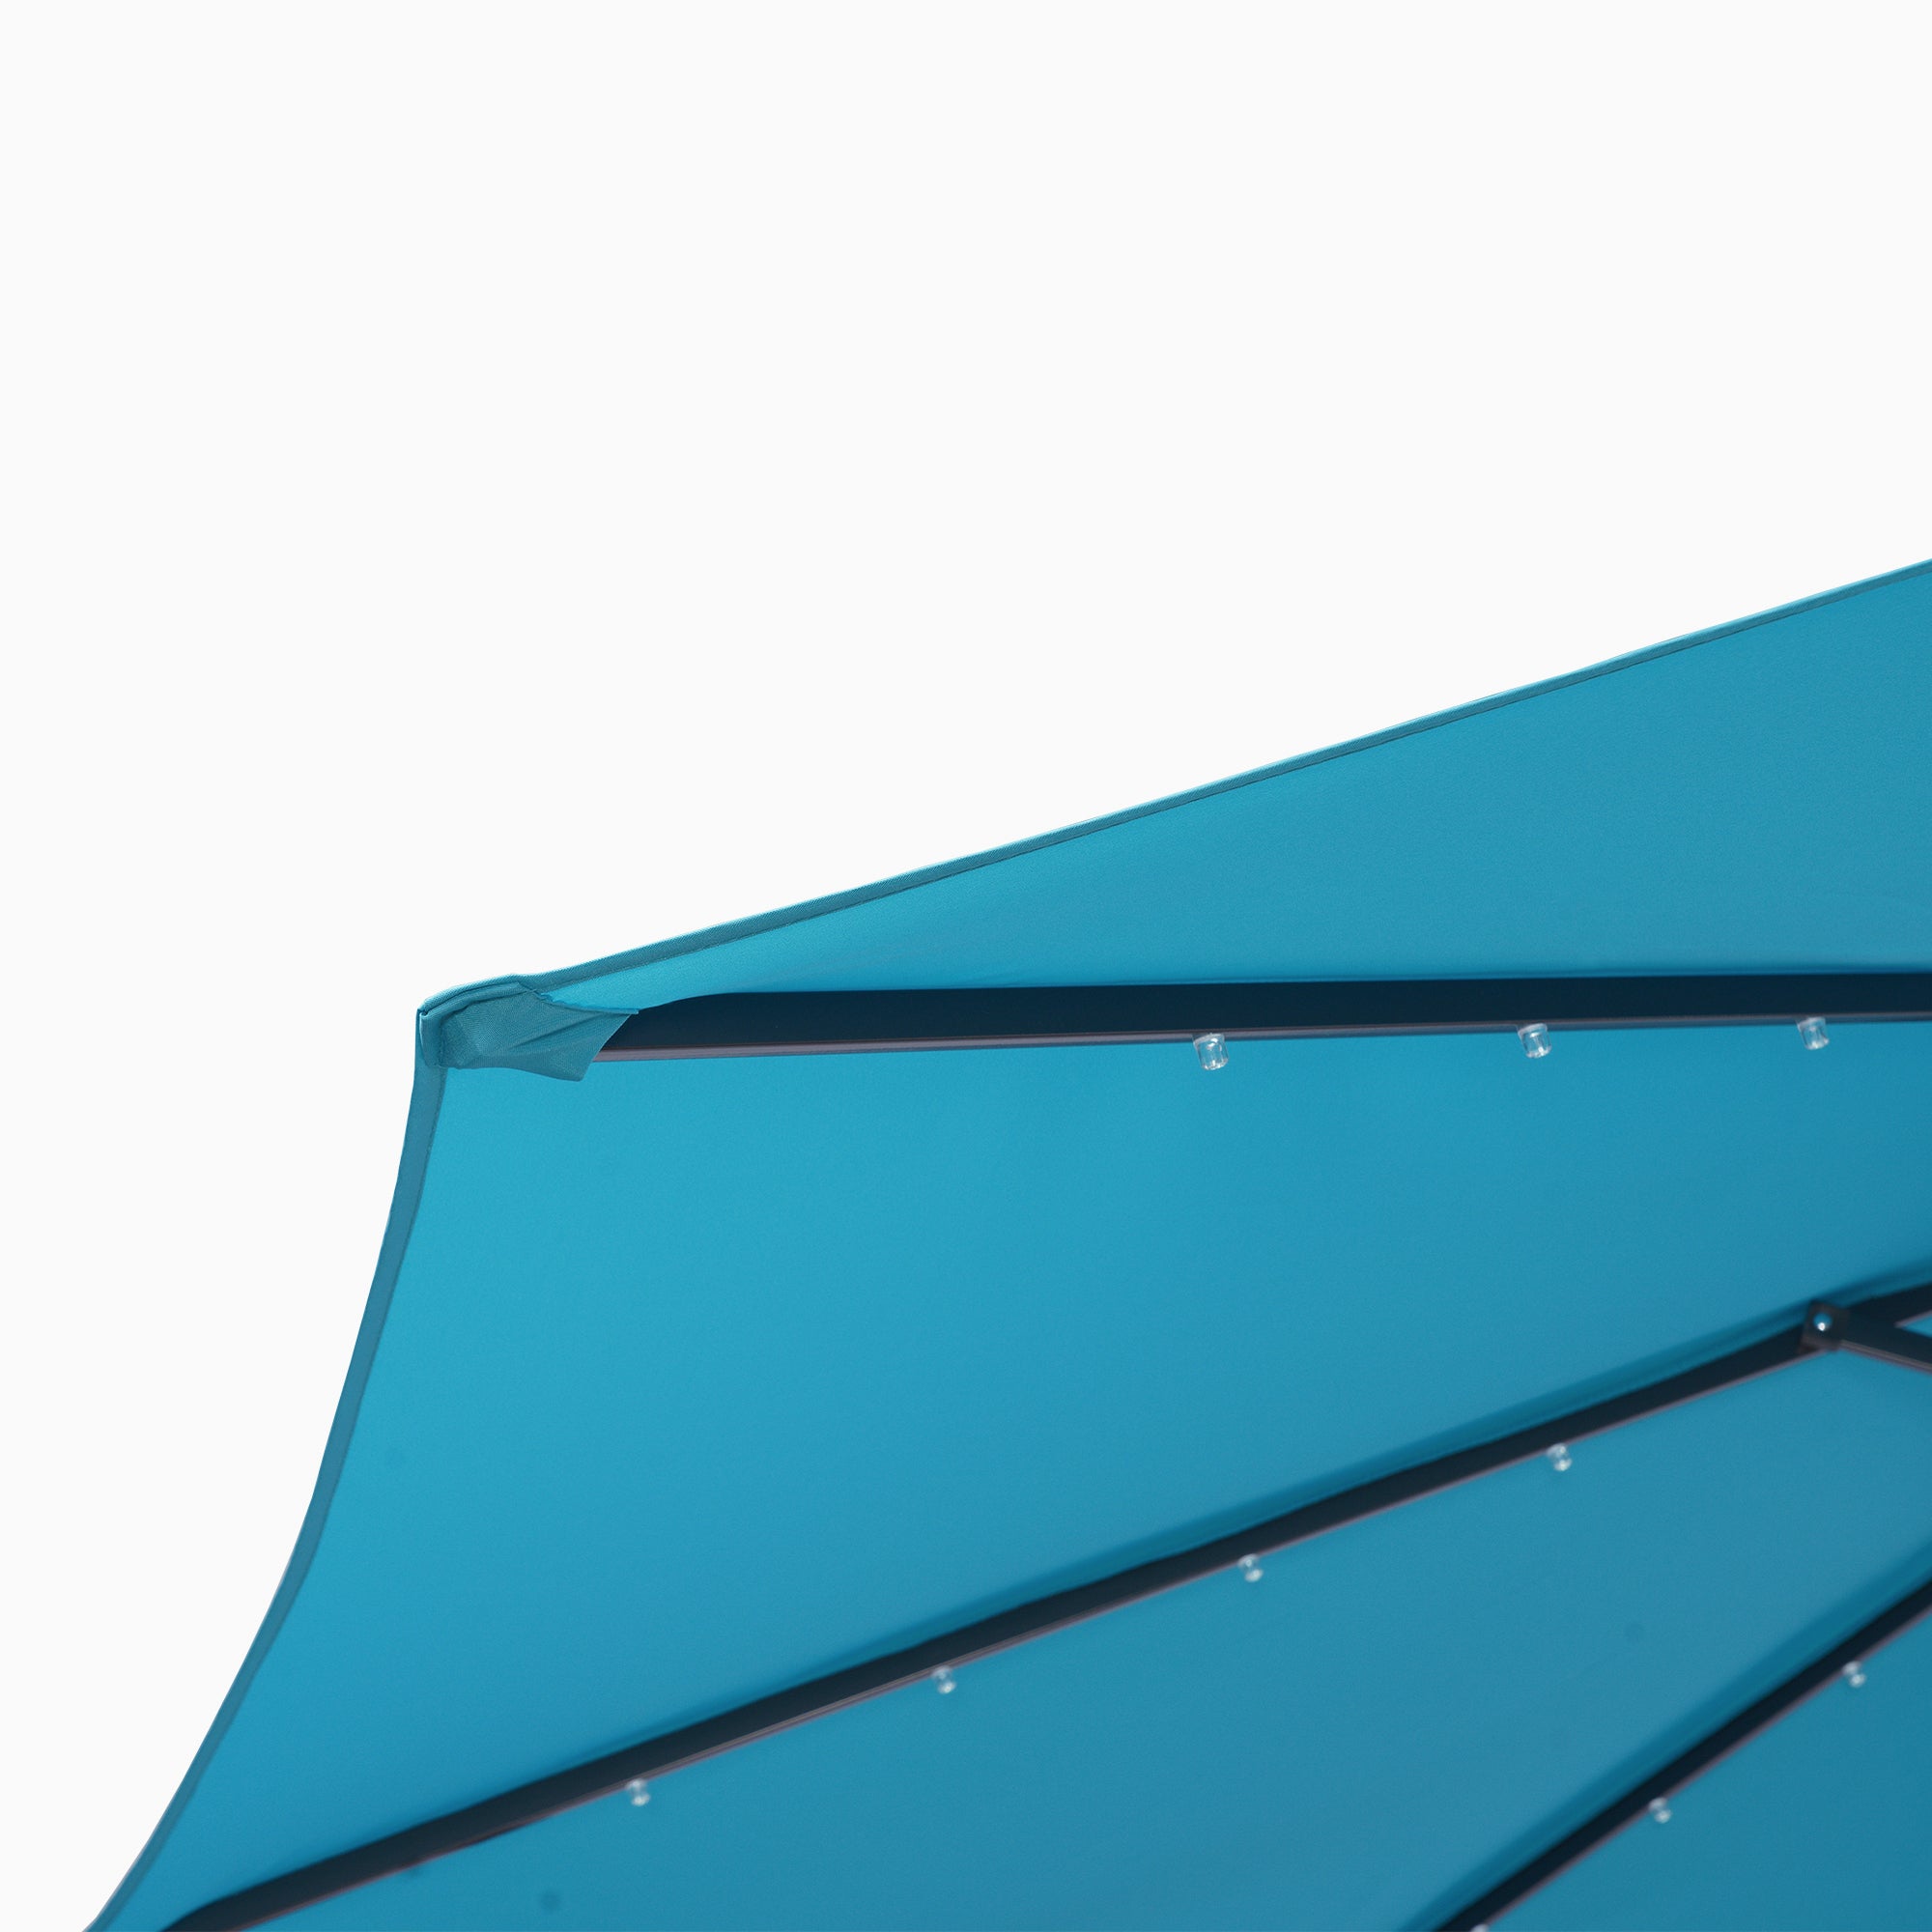 10 FT Solar LED Patio Outdoor Umbrella Hanging blue-metal